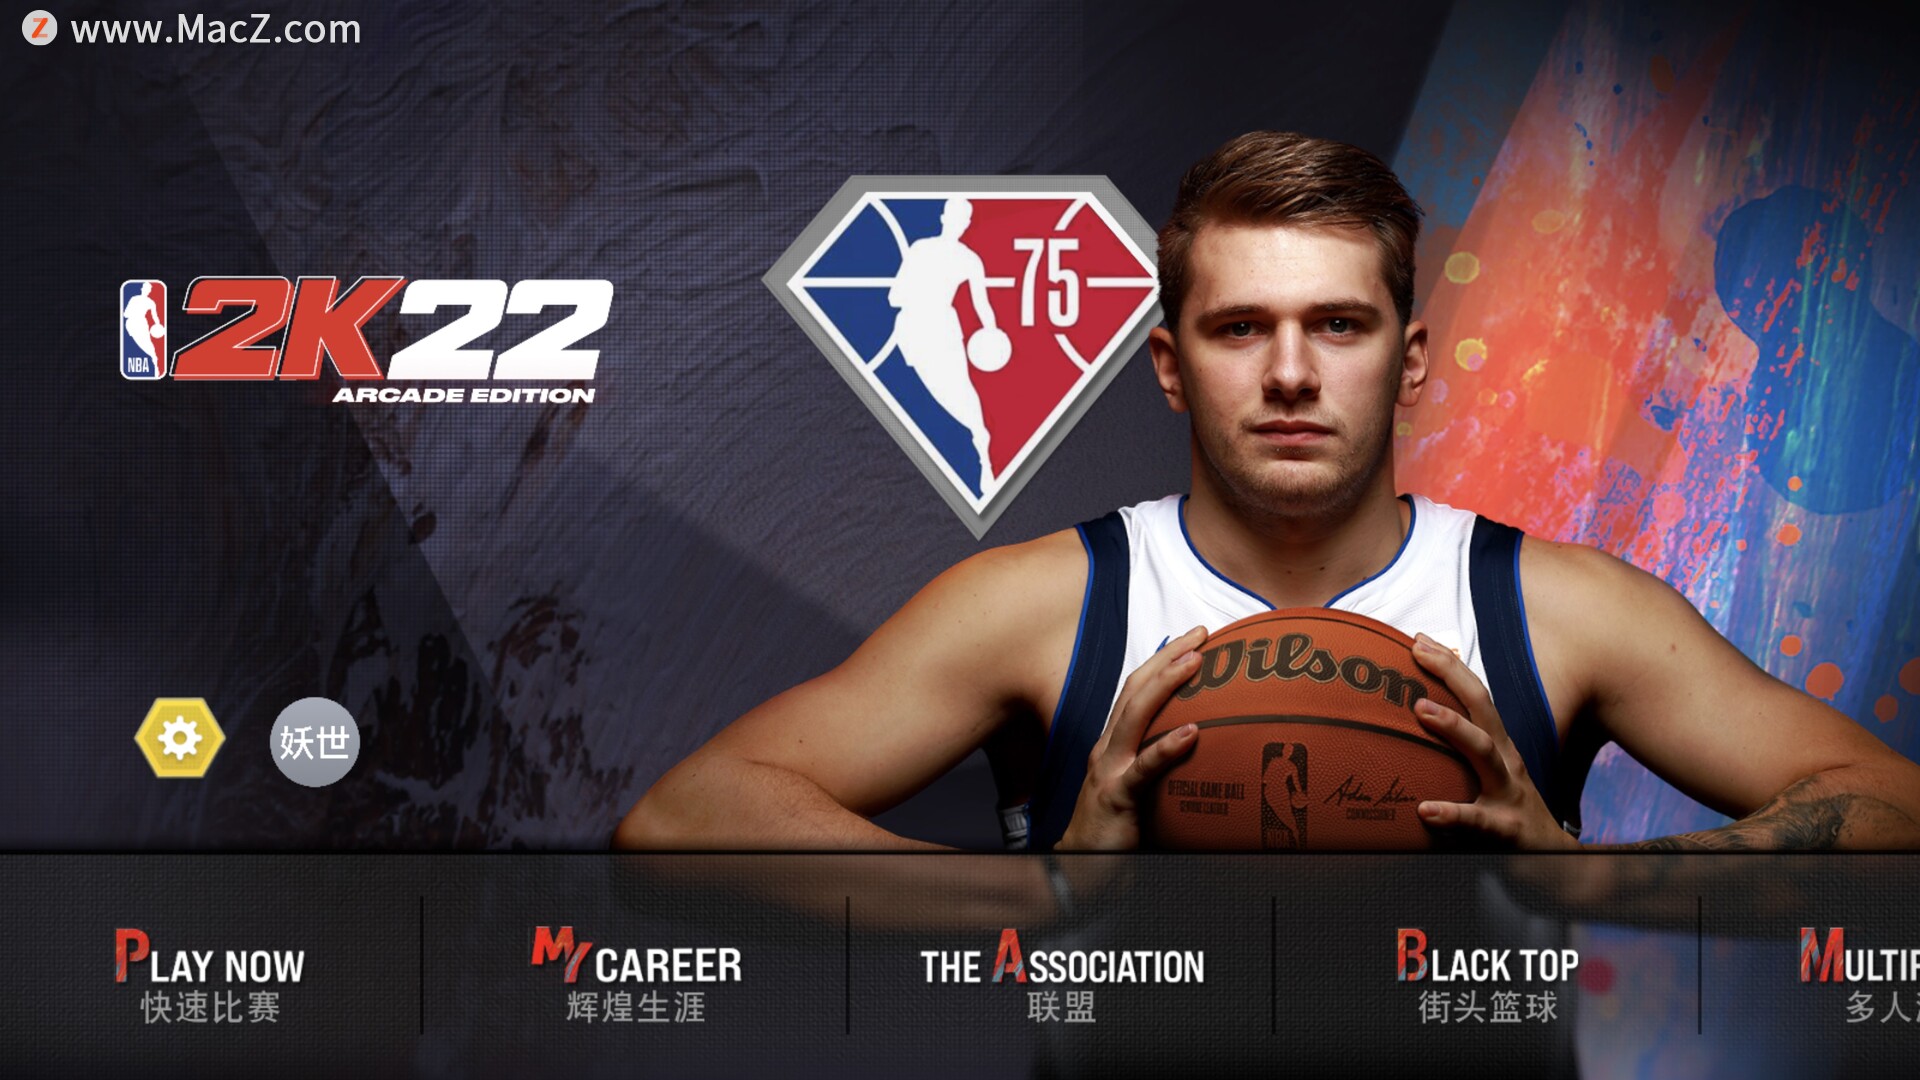 NBA 2K22 Arcade Edition for Mac